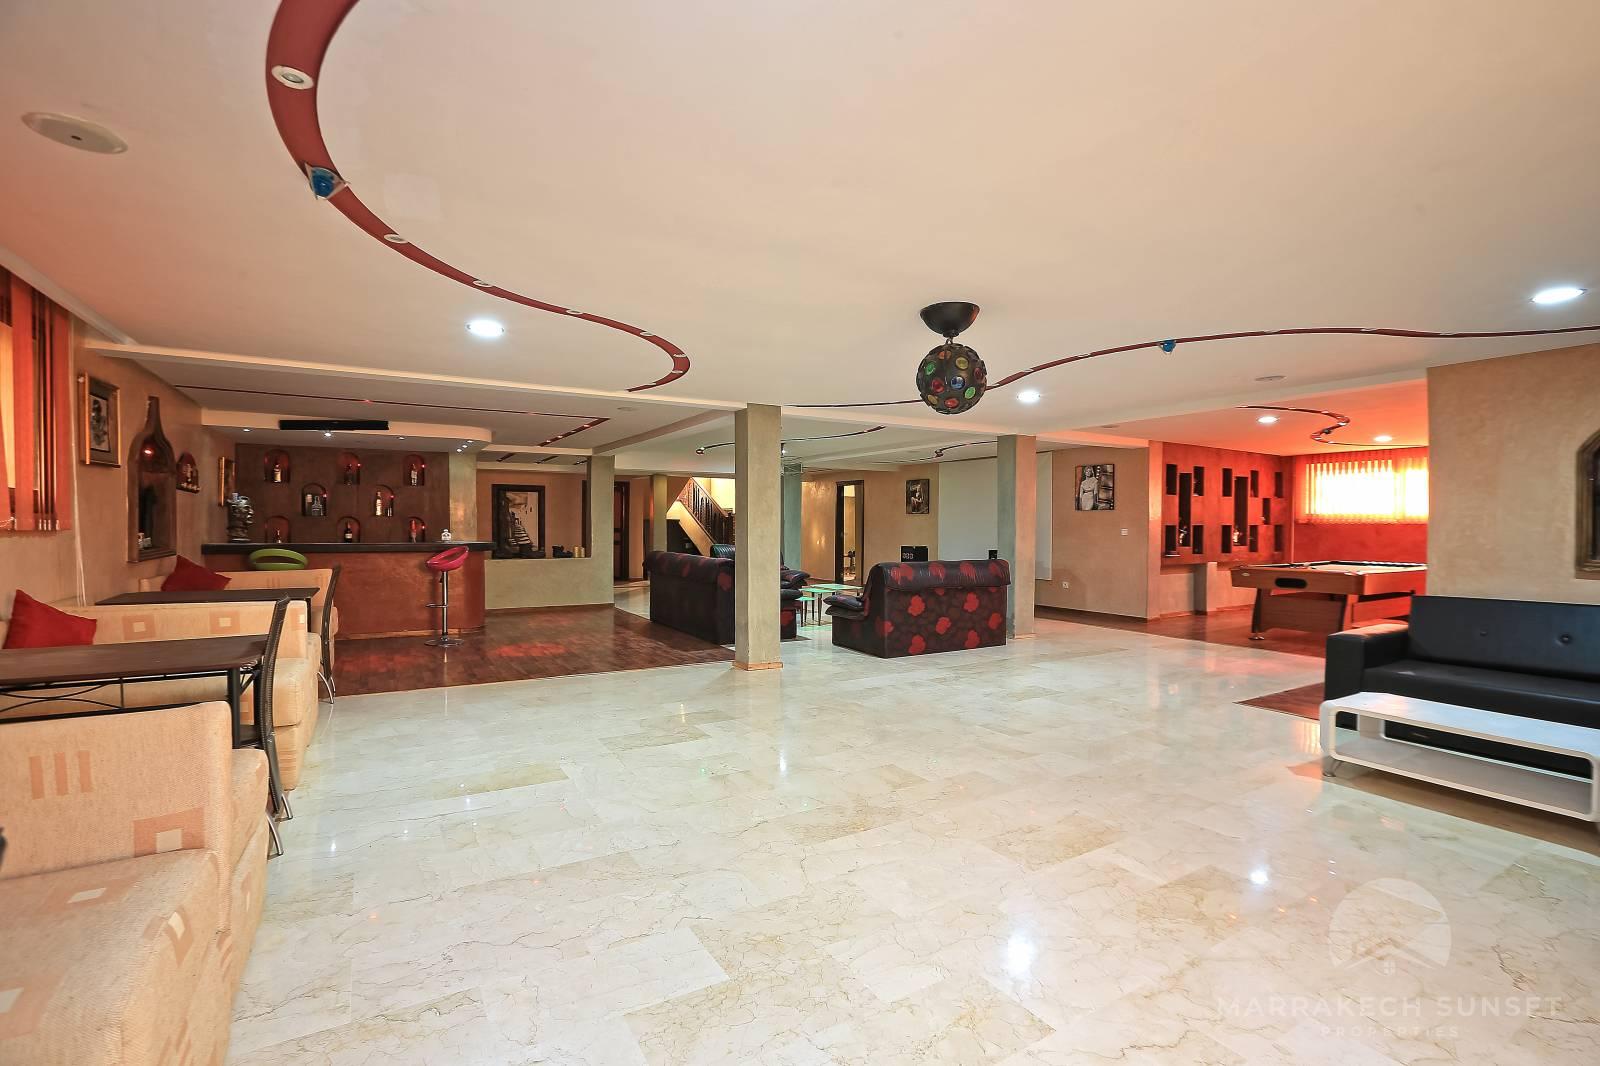 8 bedroom villa for sale Marrakech Amelkis golf club